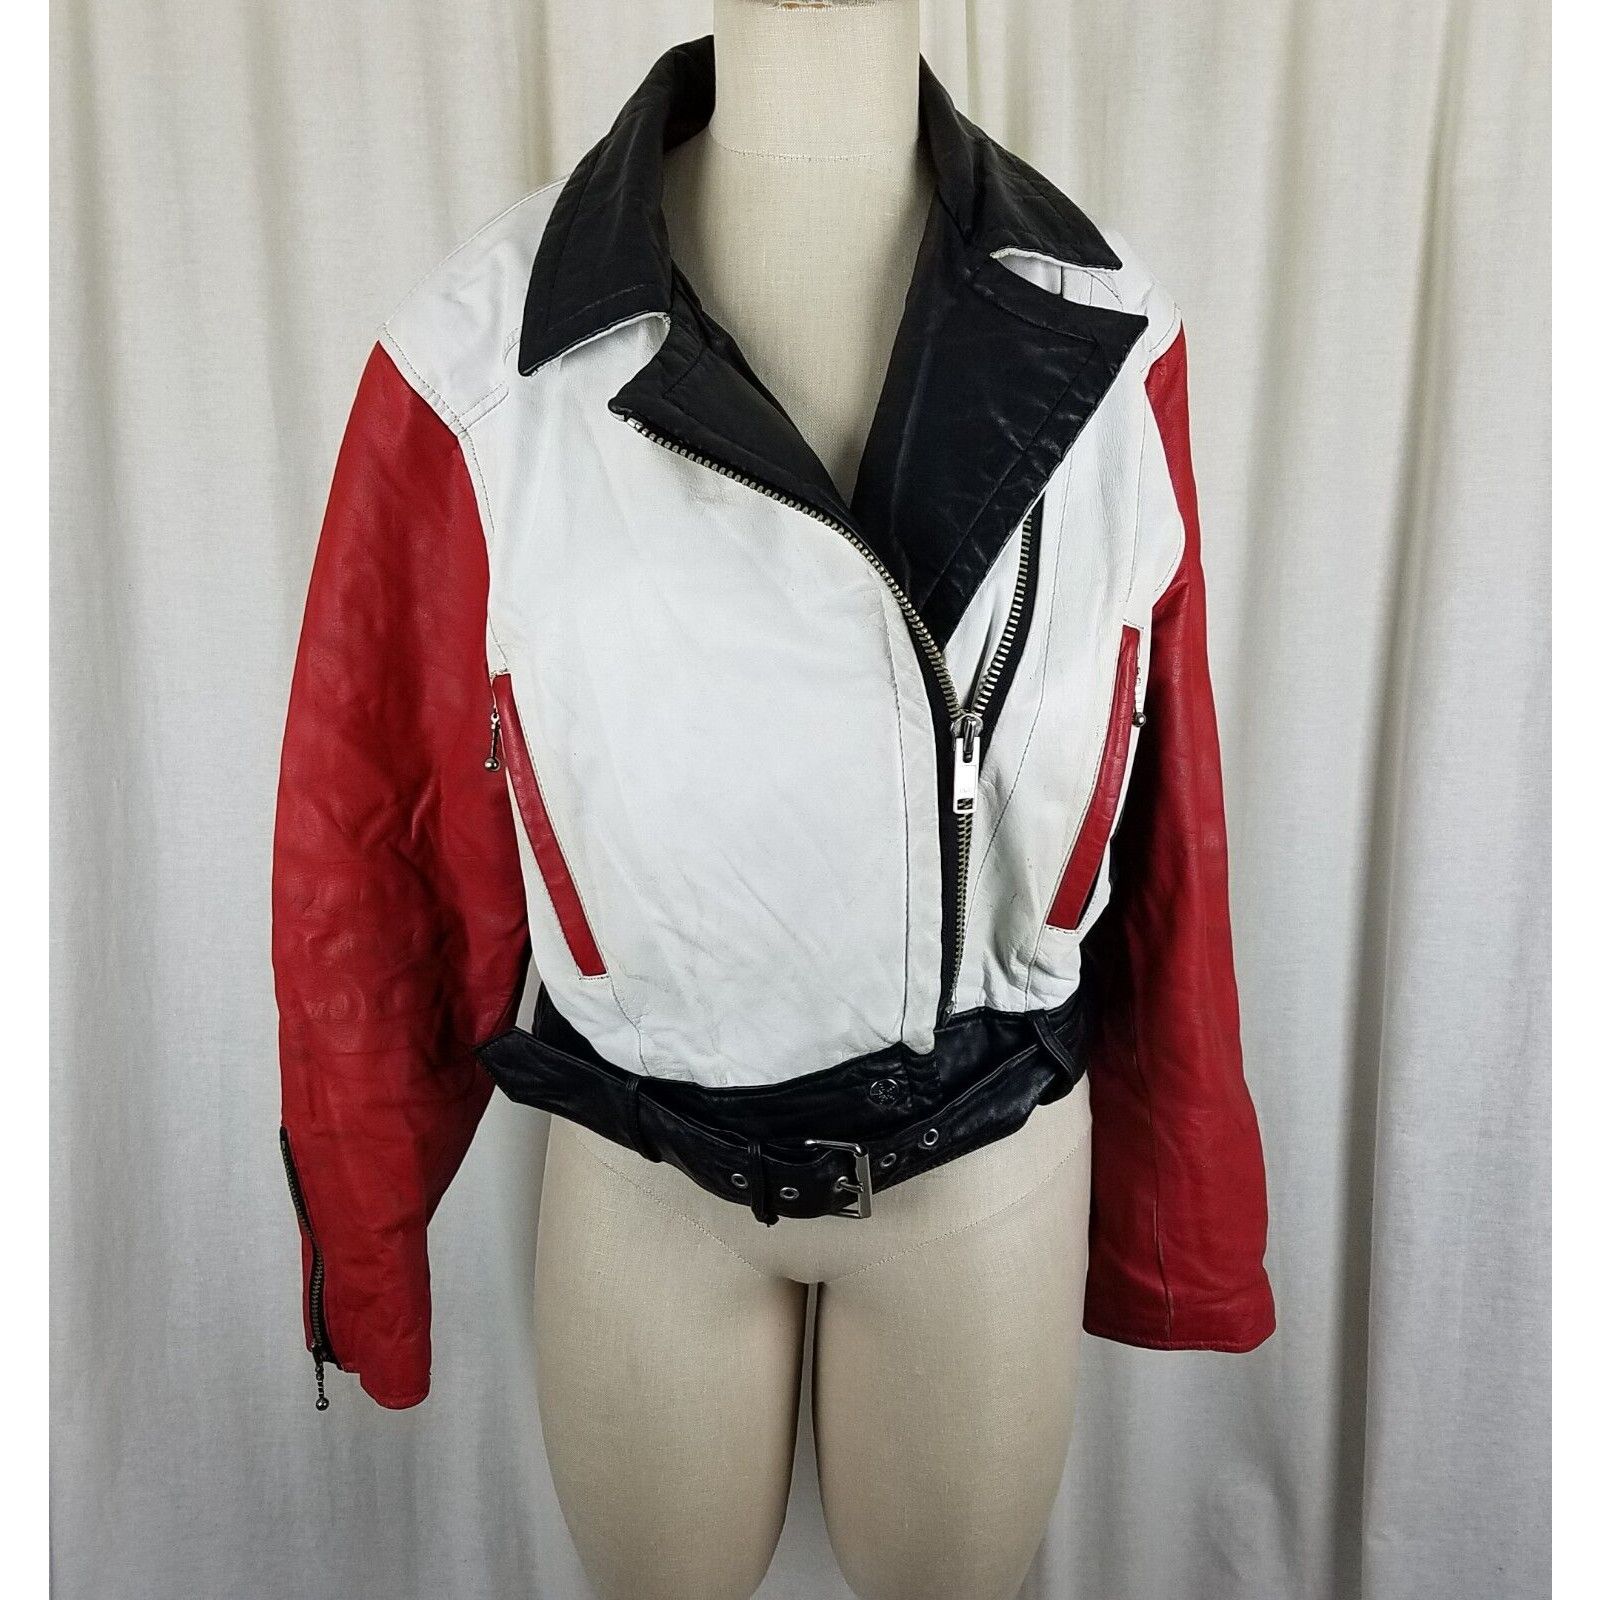 Vintage Chia Colorblock Leather Moto Biker Jacket Belted MJ Thriller Size L / US 10 / IT 46 - 1 Preview